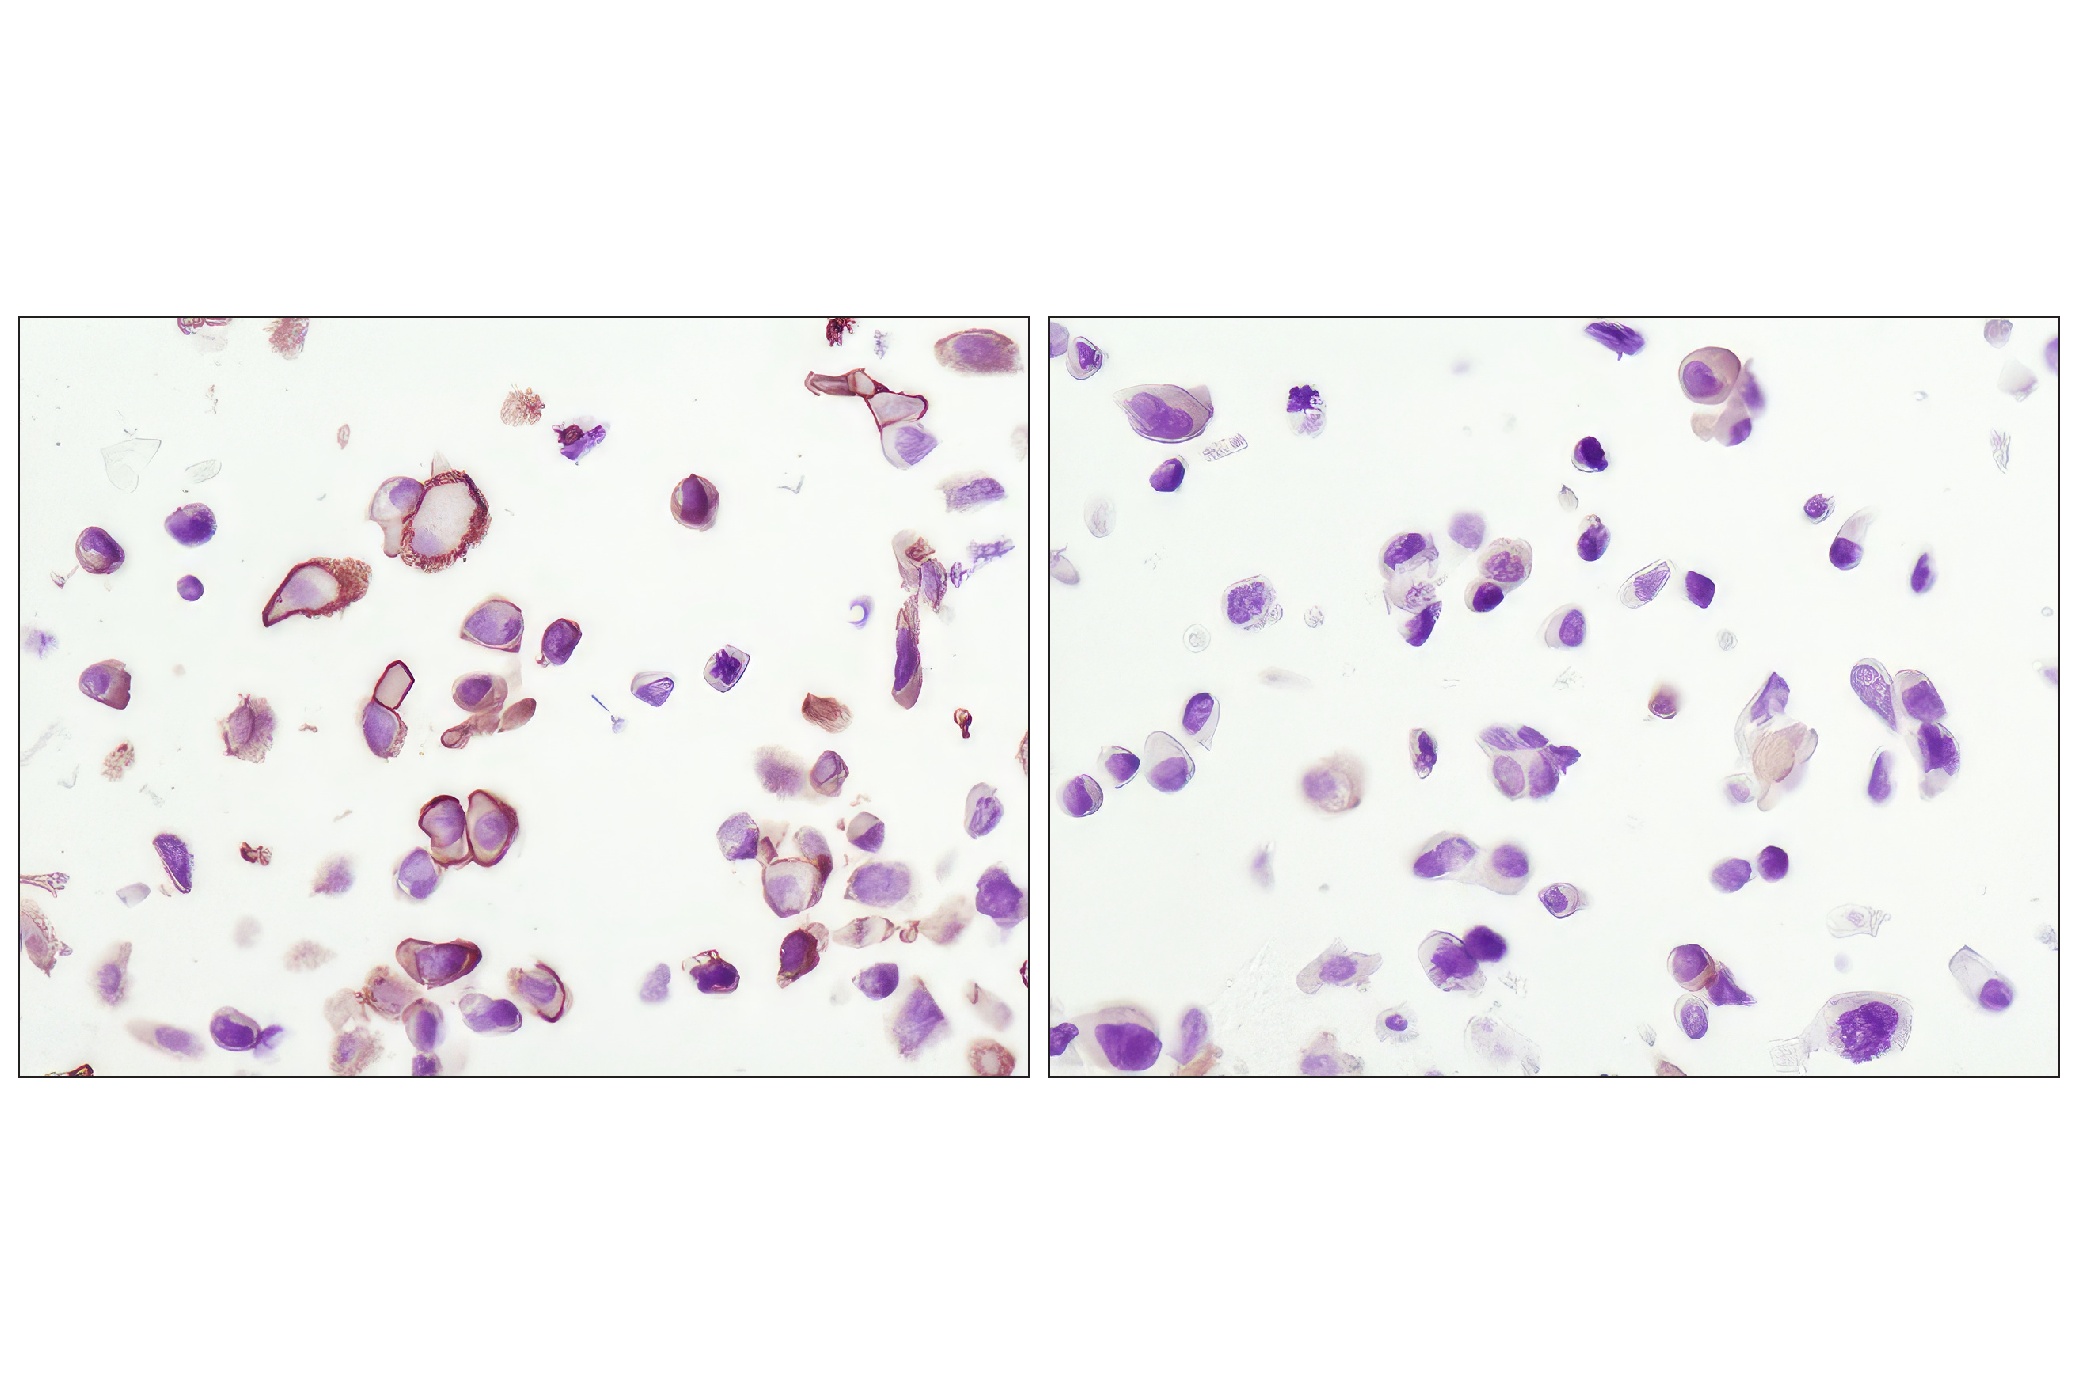  Image 29: Phospho-Akt Isoform Antibody Sampler Kit